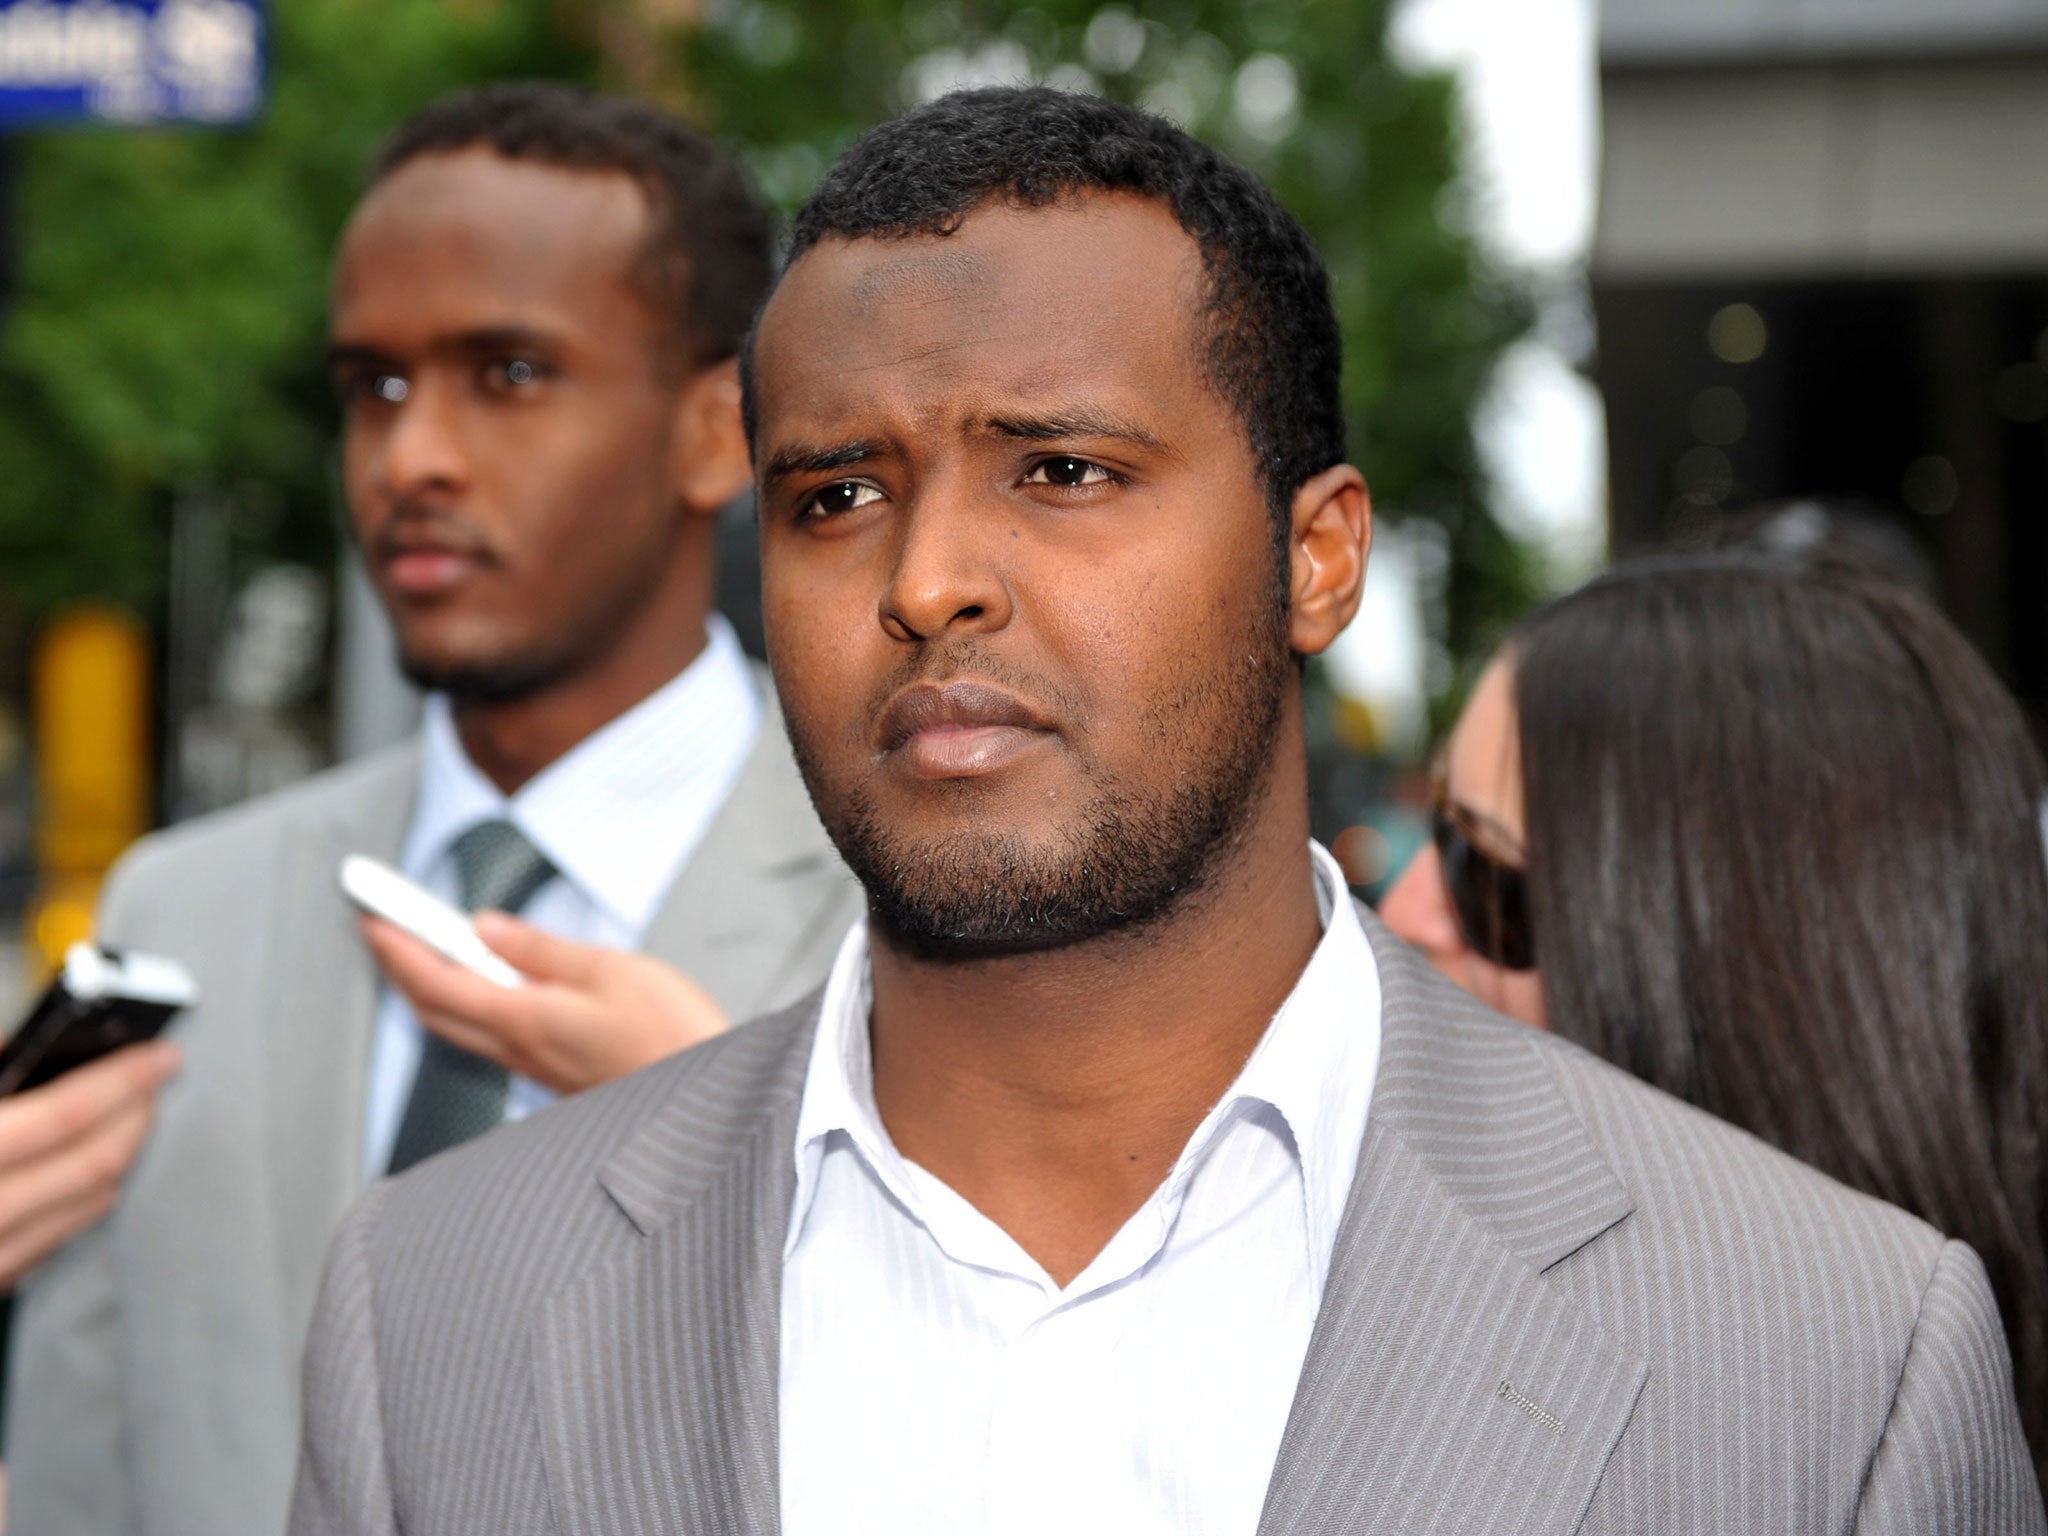 Yacqub Khayre leaves court in Melbourne, Australia, 23 December 2010